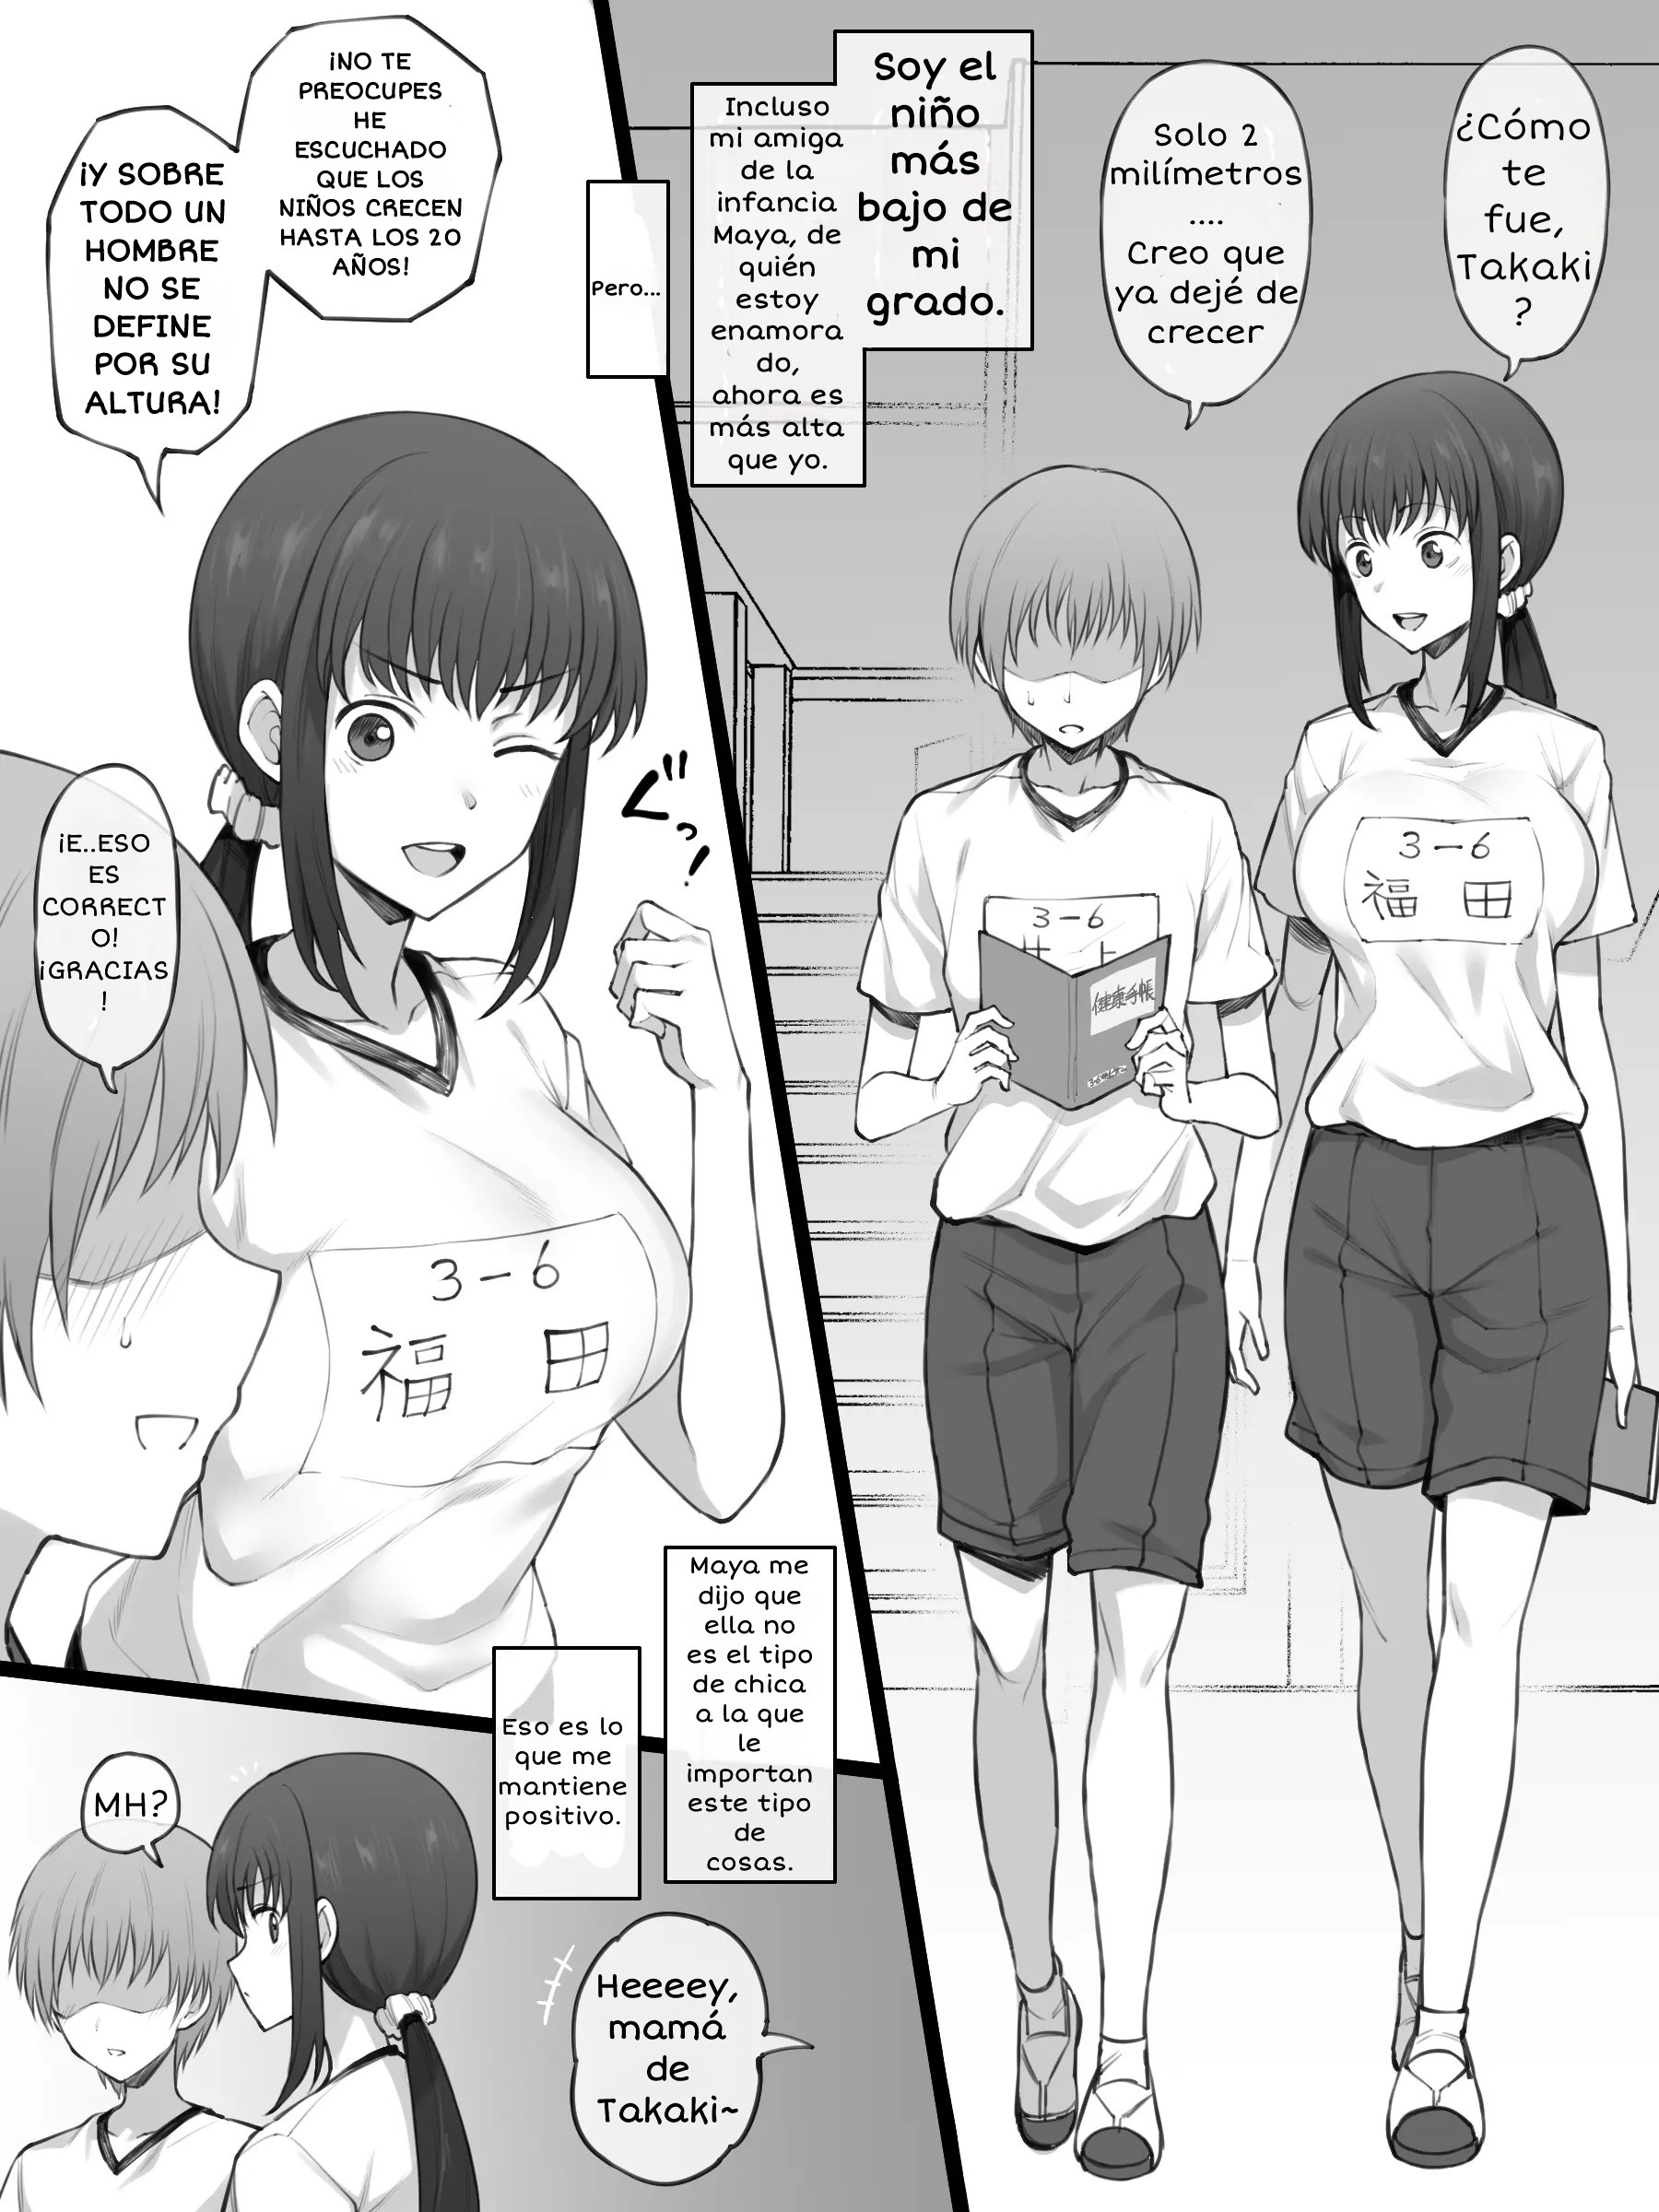 Terasu MC] A Childhood Friend Who Cheerfully Comforts me When I'm Worried  About my Short Stature (Manga Hentai) - ChoChoxHD - Ver Comics Porno Gratis  - Comics XXX 2023 - ChoChoX.com